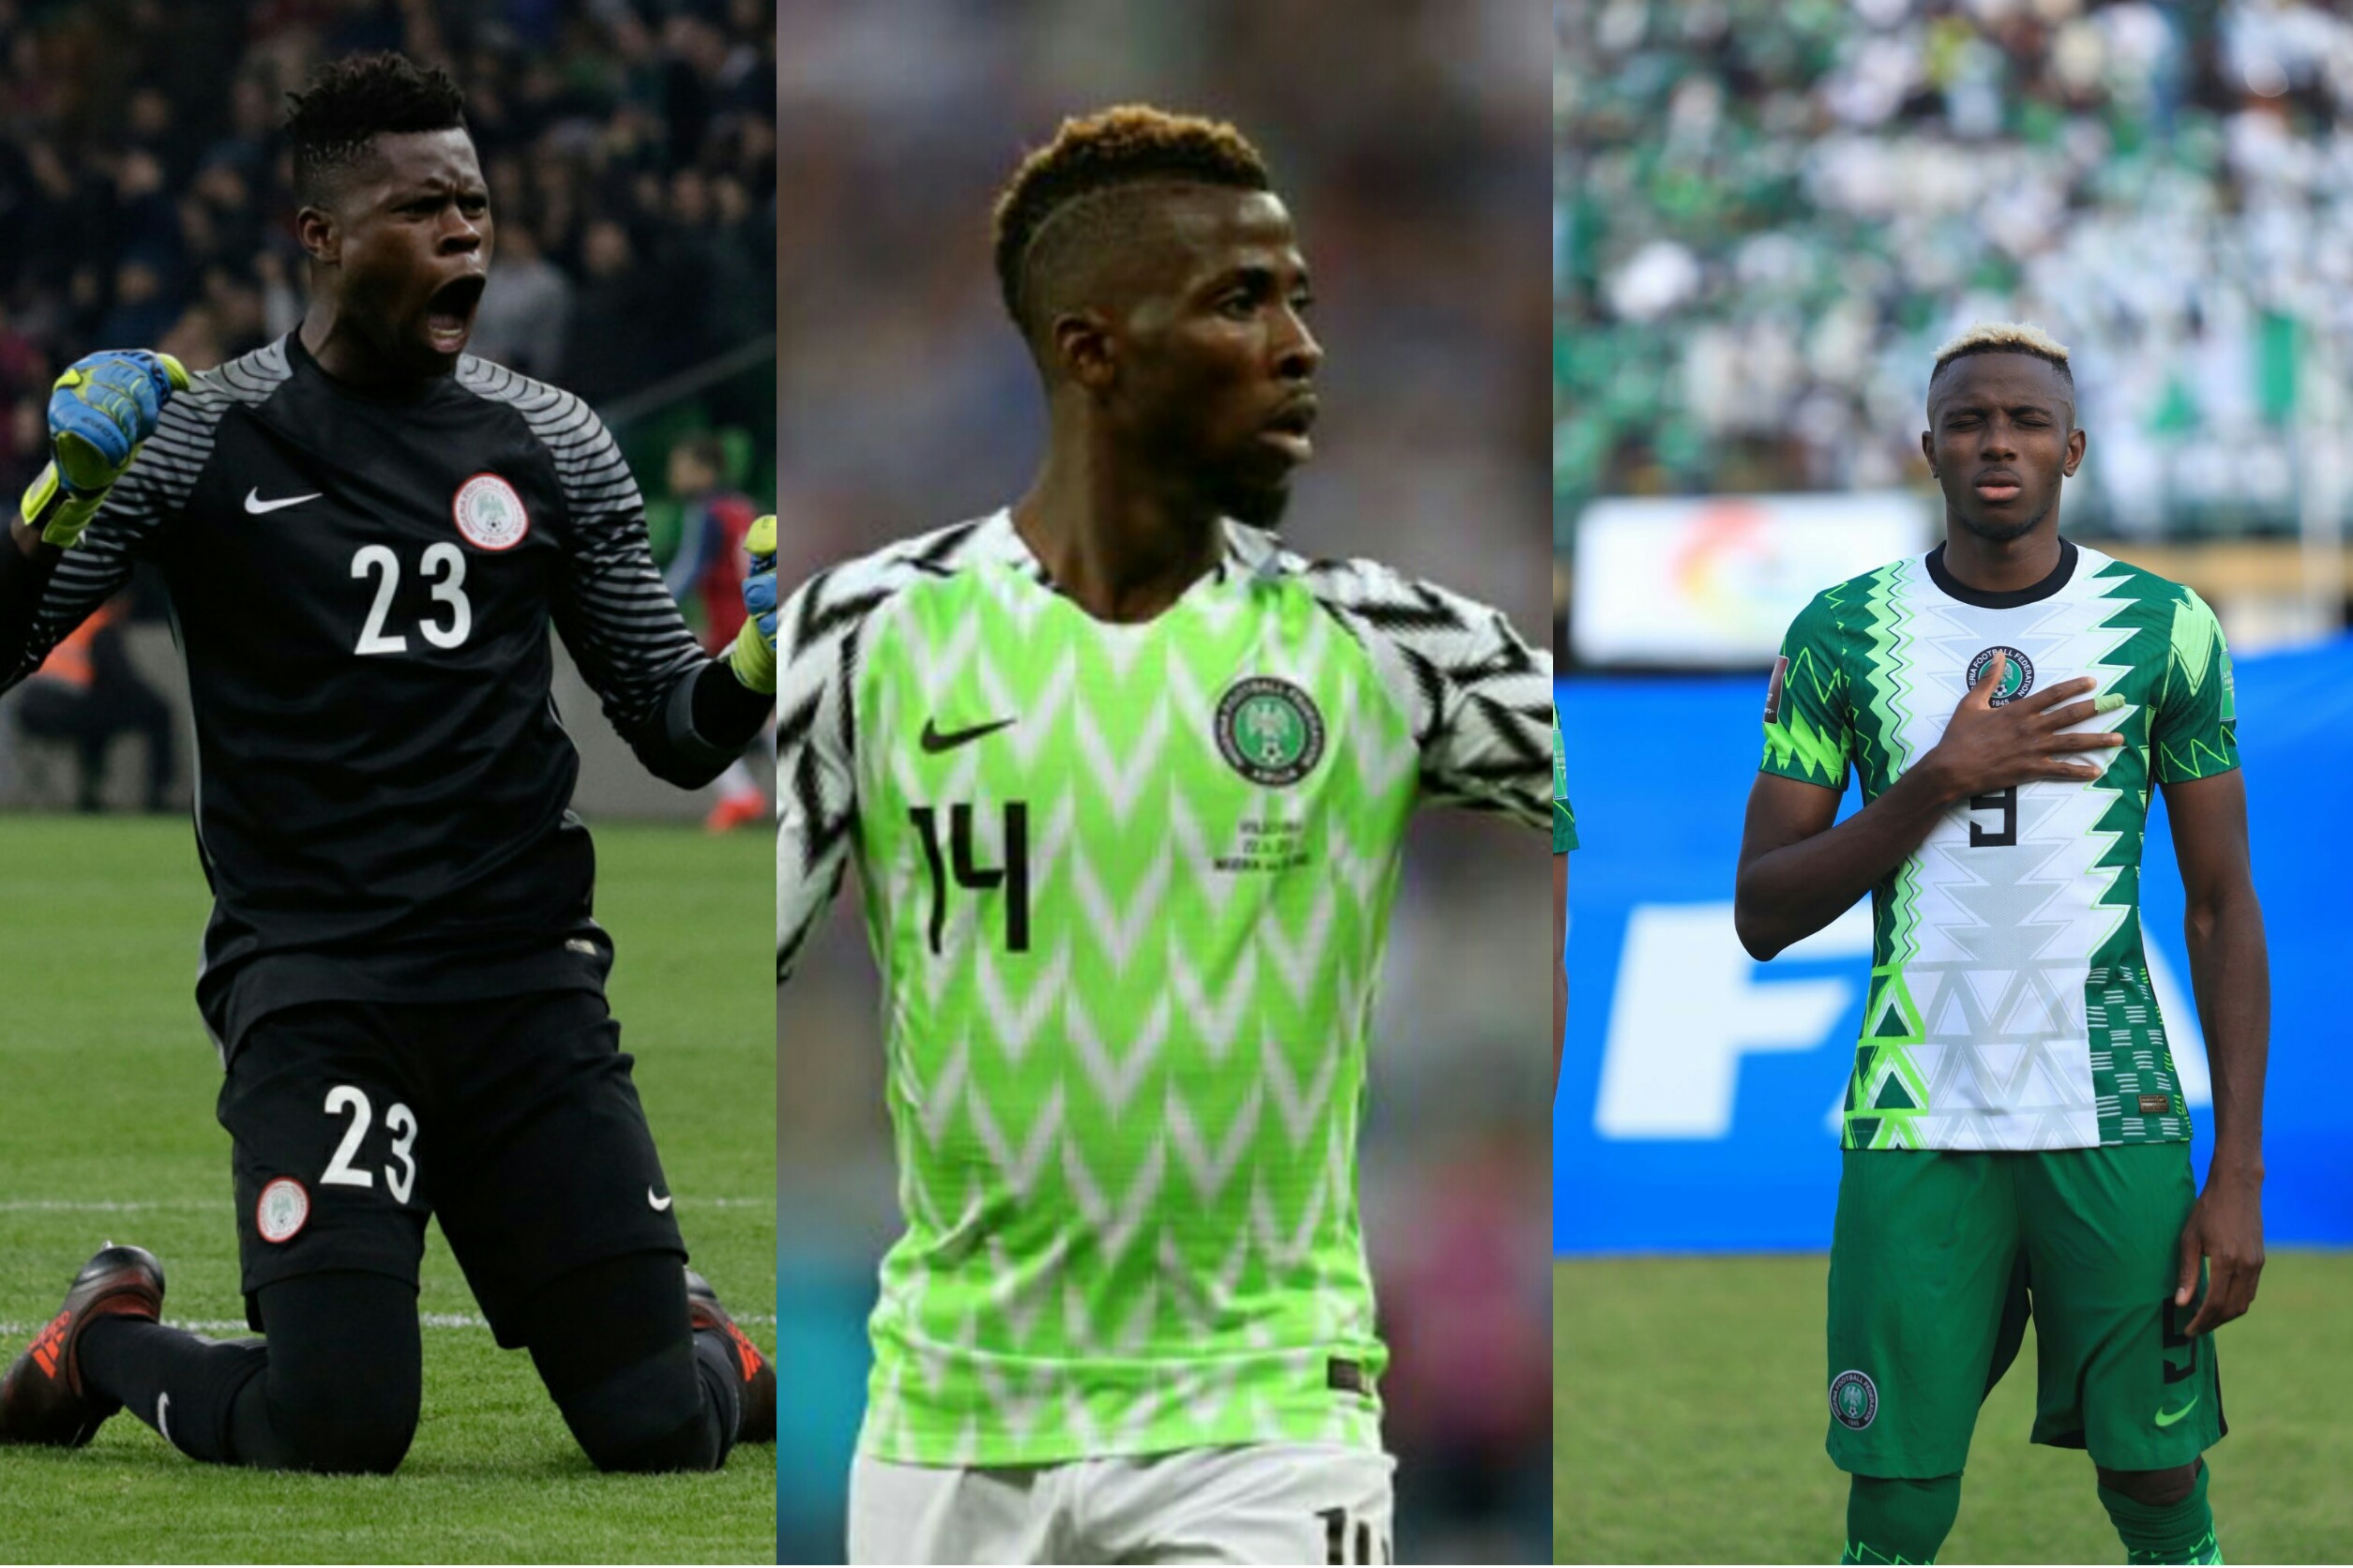 23-man squad to represent Nigeria at AFCON qualifiers - AlimoshoToday.com